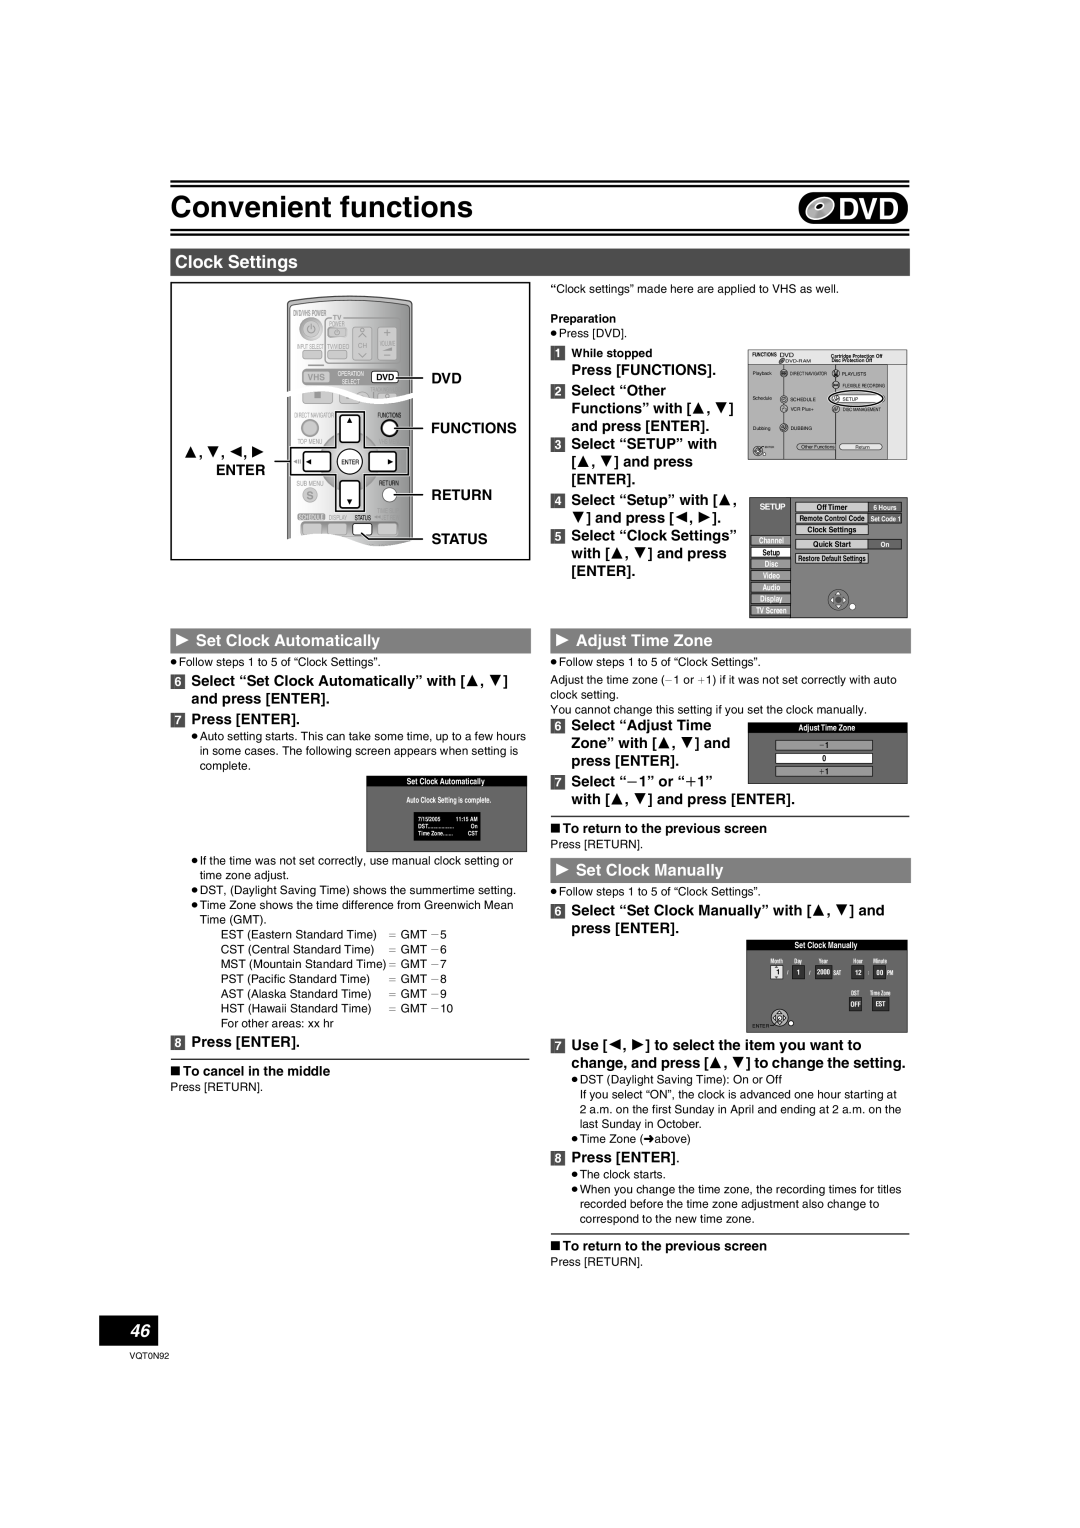 Panasonic DMR-ES30V Clock Settings, Set Clock Automatically, Adjust Time Zone, Set Clock Manually, 3, 4, 2, Functions 